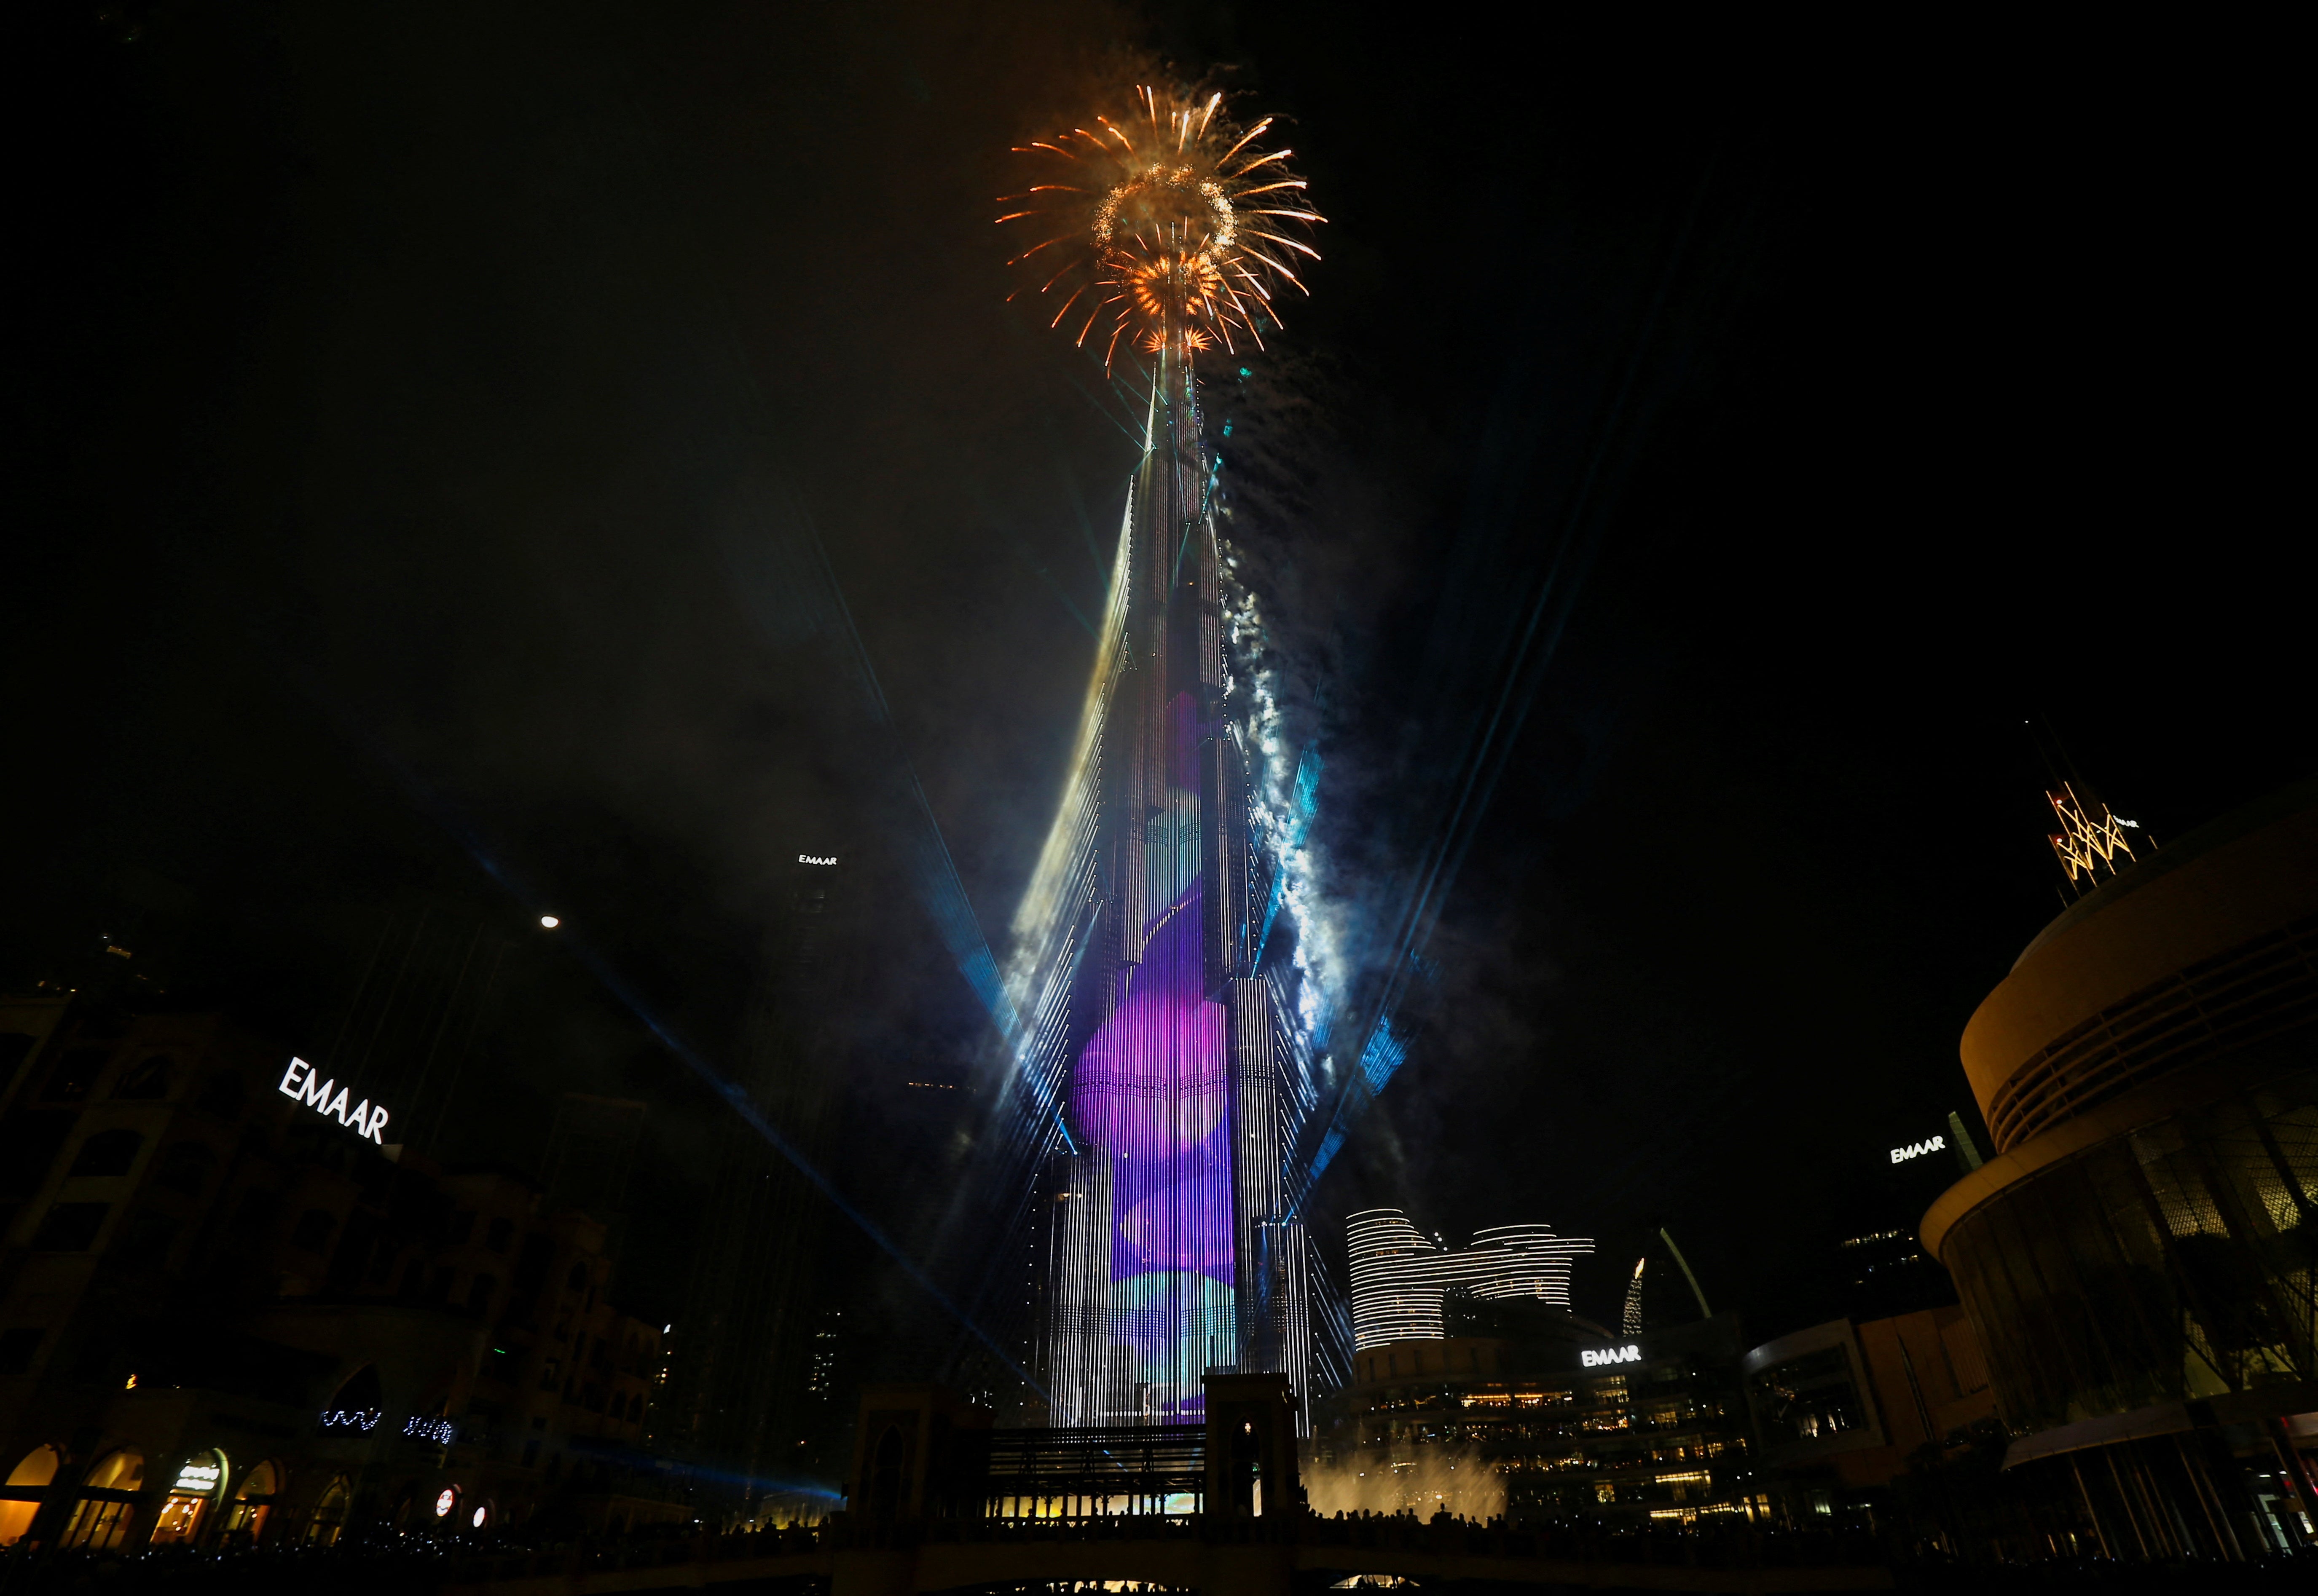 Fireworks explode from the Burj Khalifa, the tallest building in the world, during festivities in Dubai